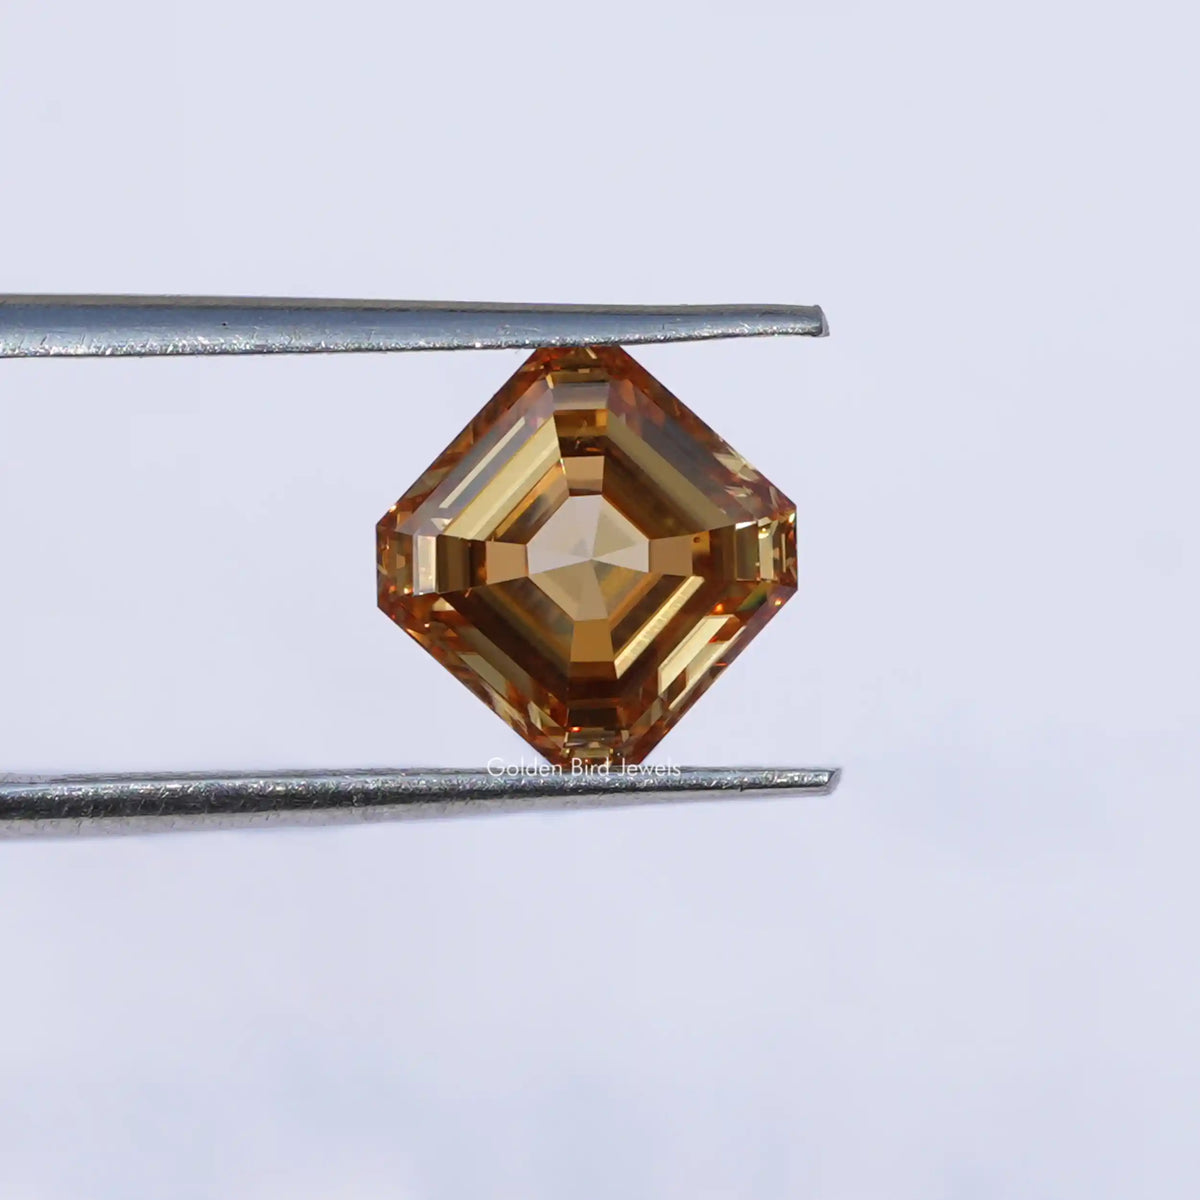 [Front view of orange asscher cut loose stone]-[Golden Bird Jewels]